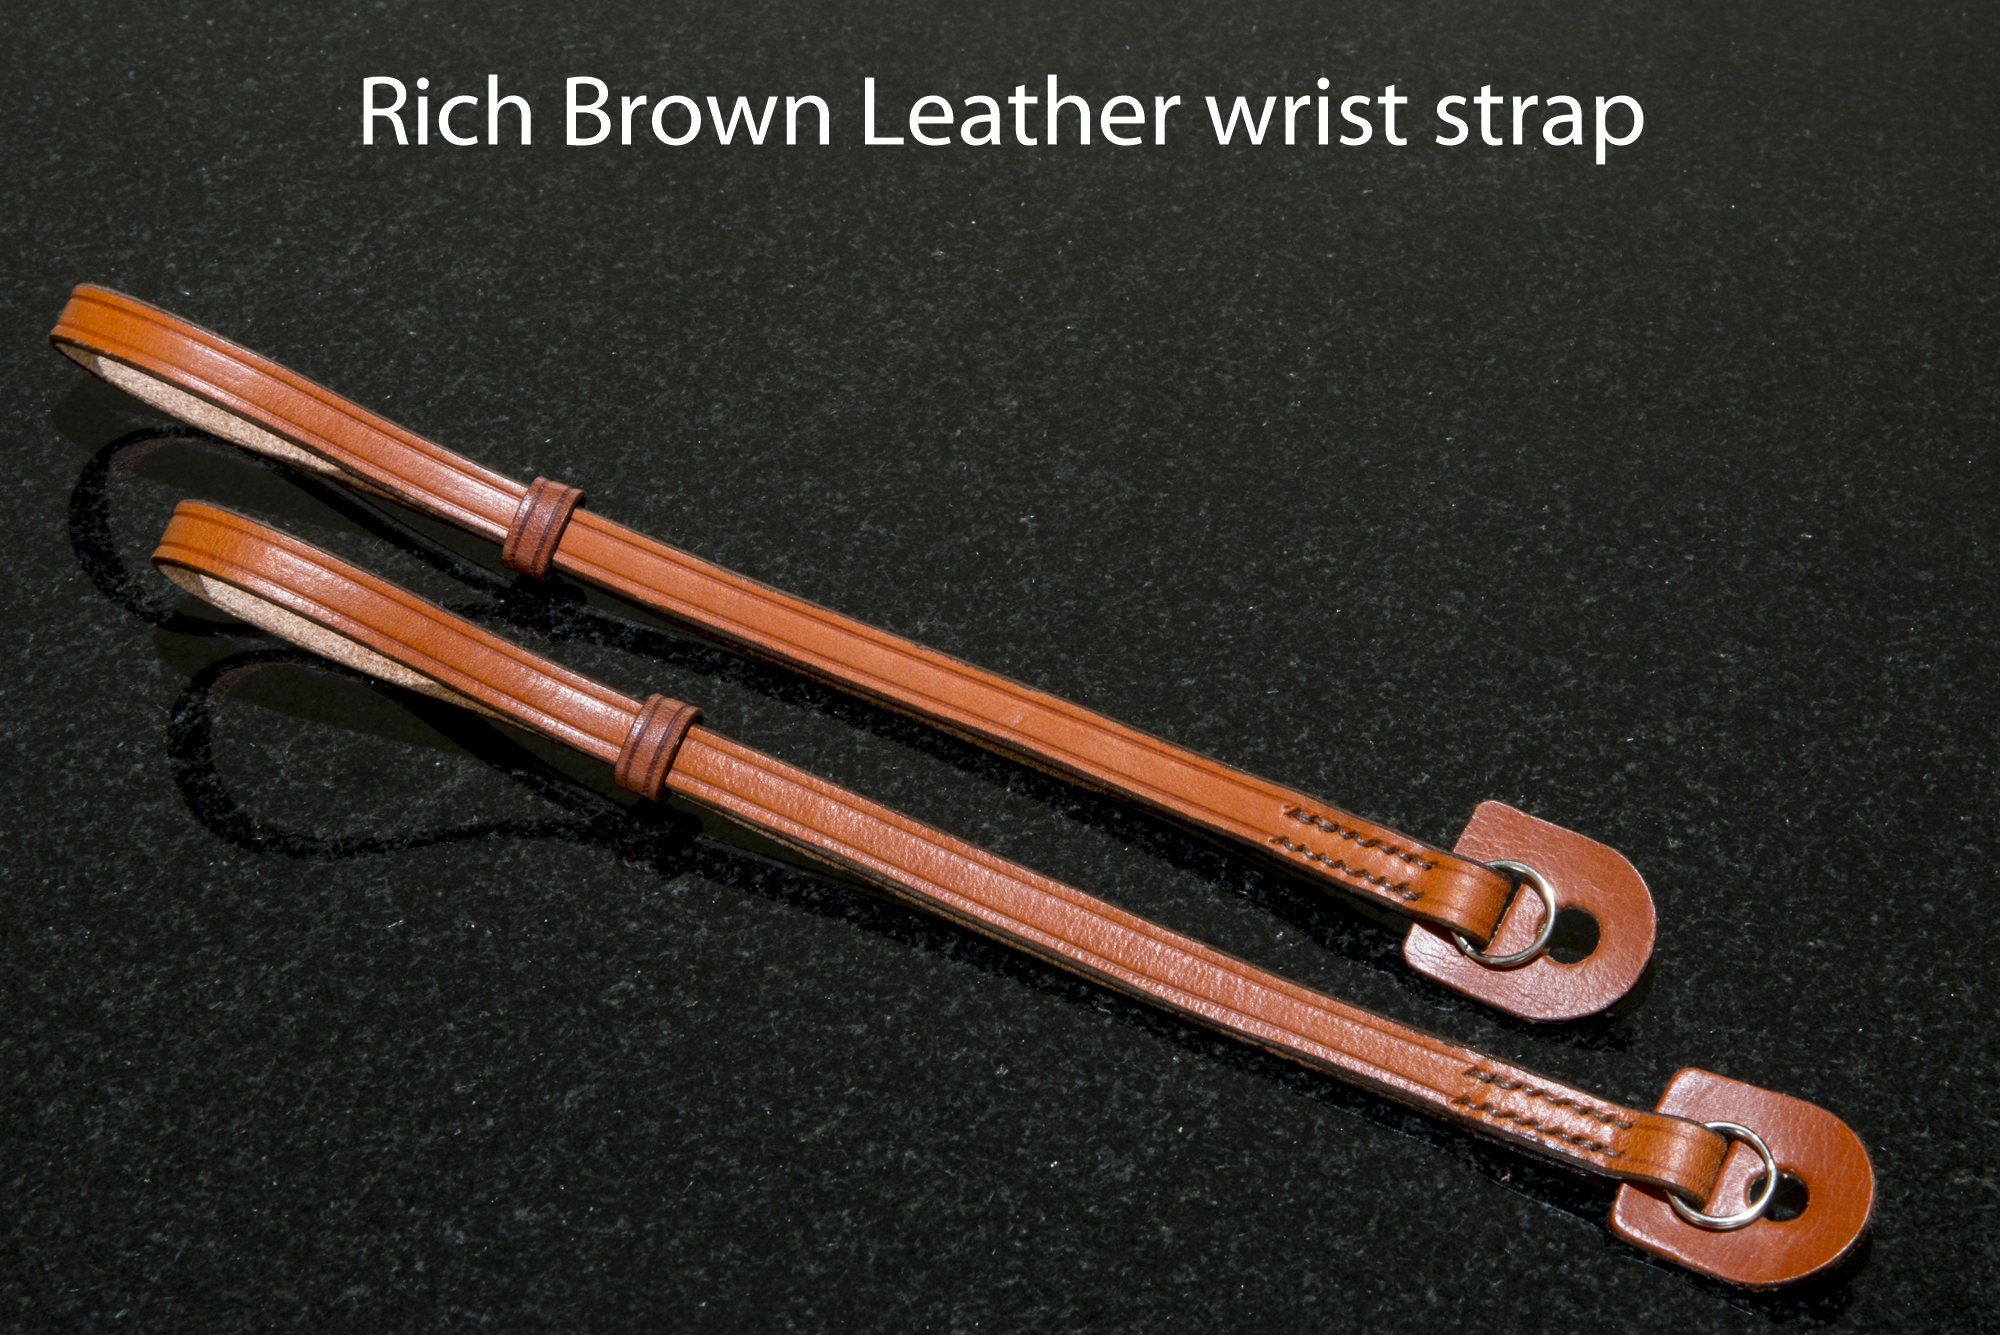 Rich brown leather wrist Strap